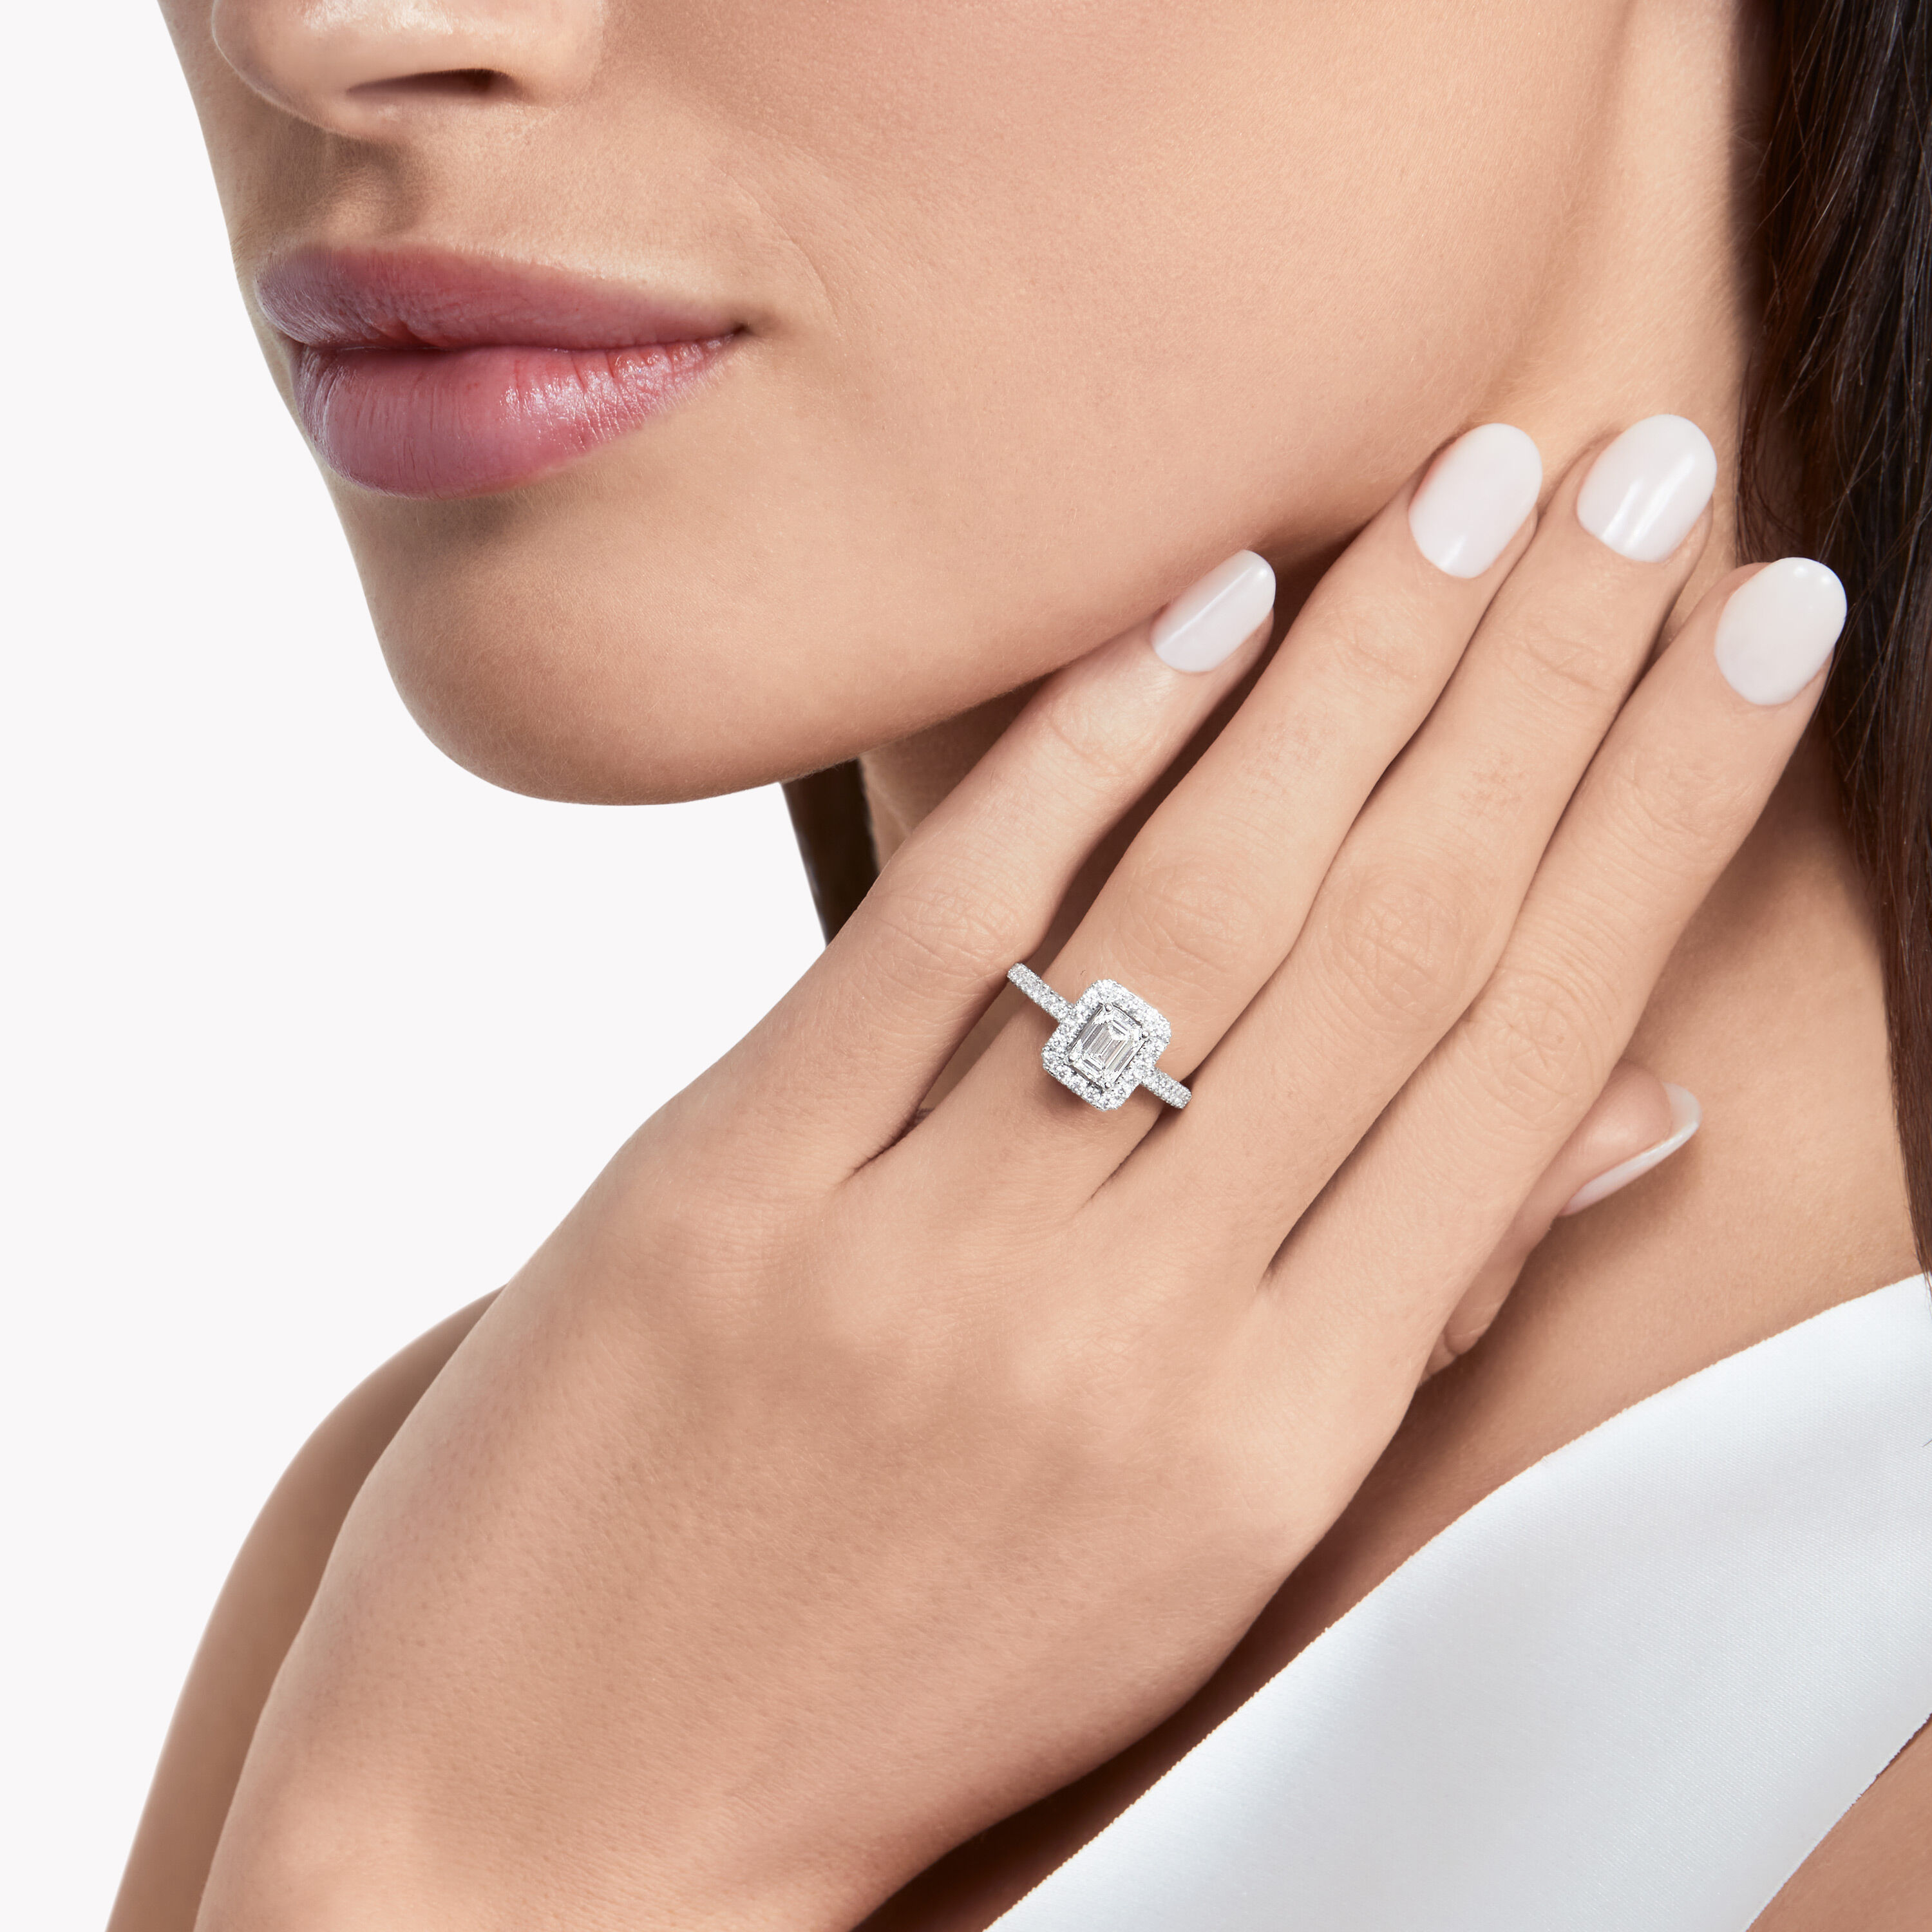 8 Carat Emerald Cut Diamond Engagement Ring 🎁❤️🌲 #alexandrabeth # emeraldcut #emeralddiamondring | Instagram